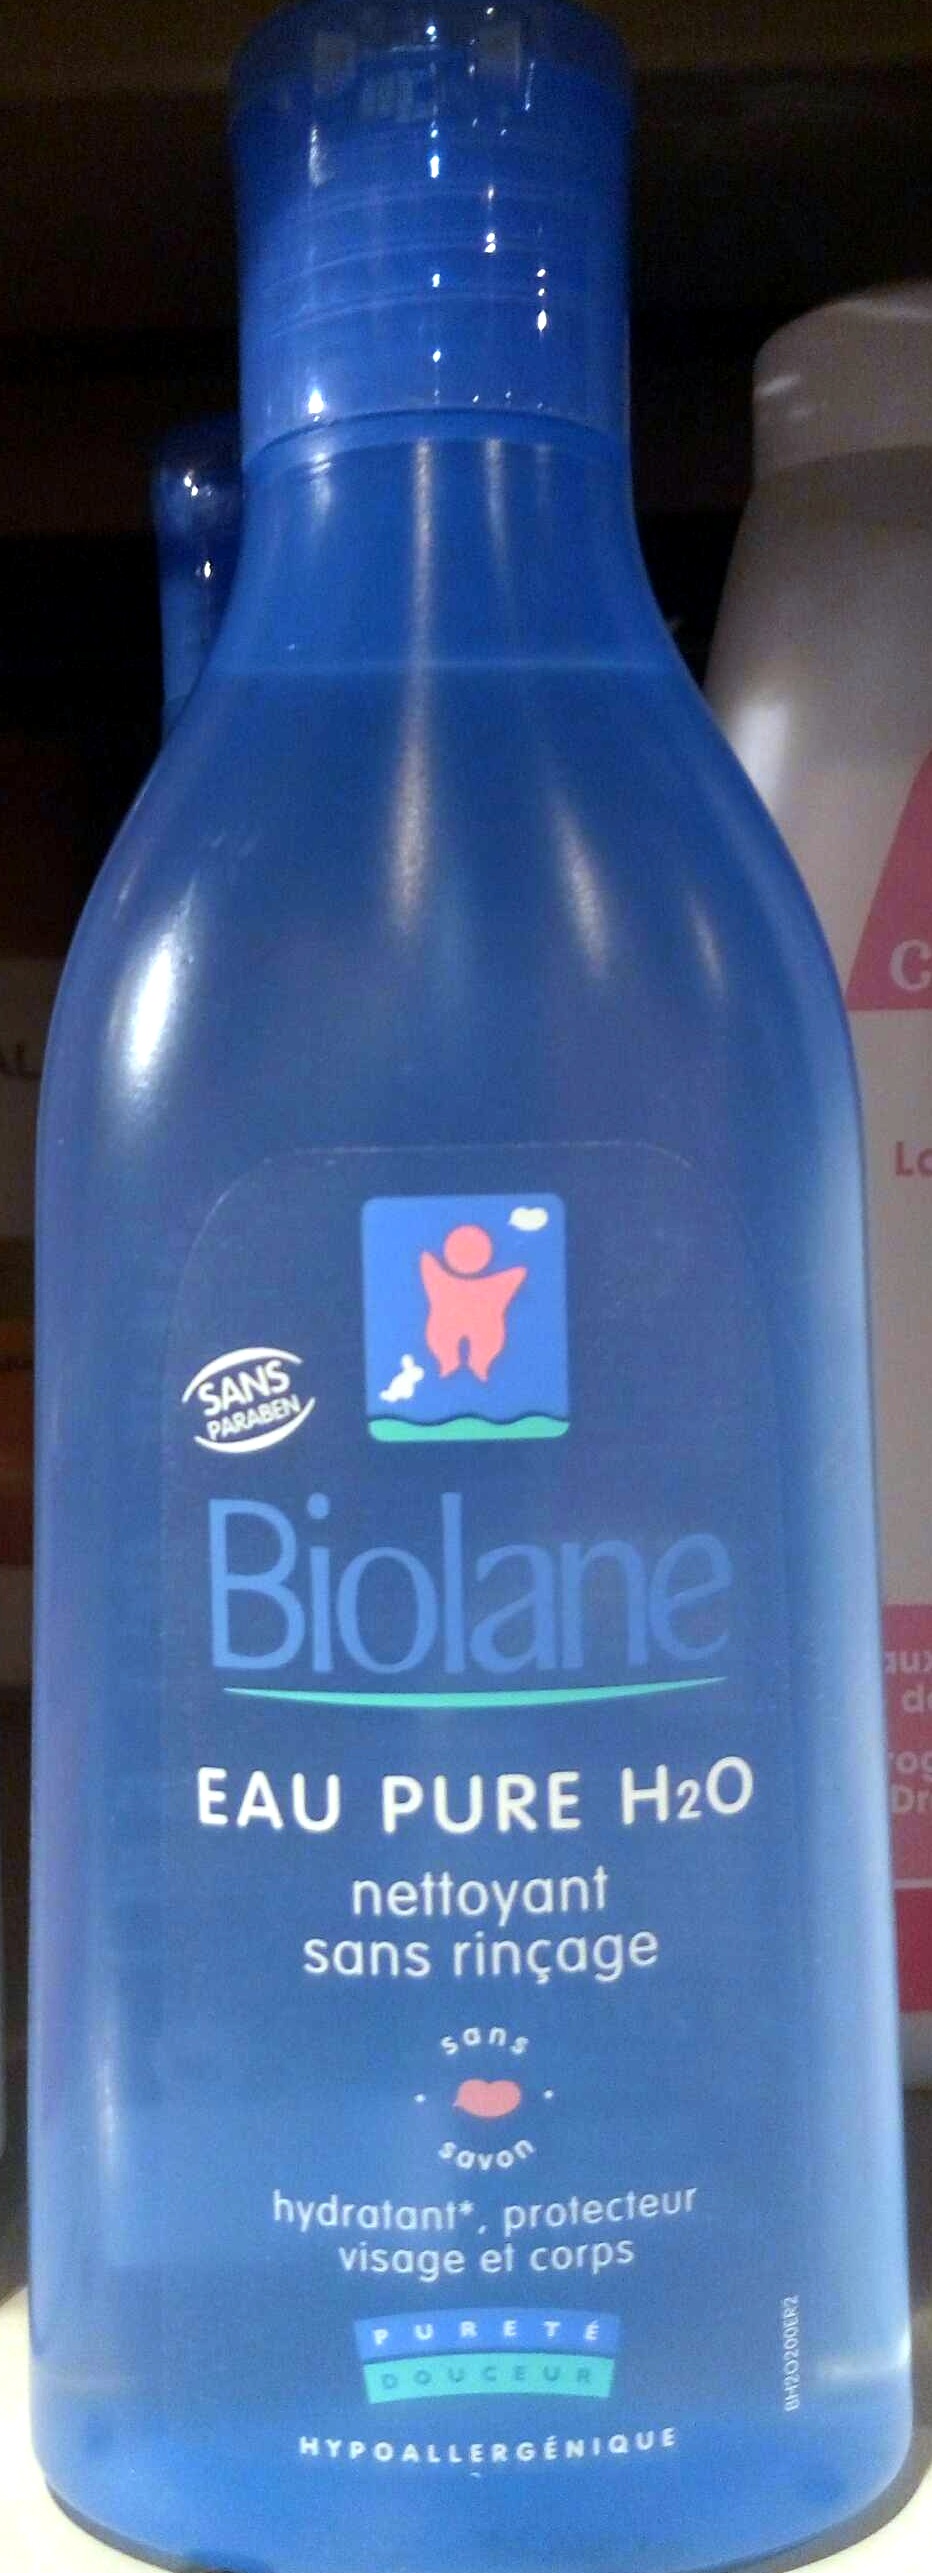 Promo Biolane eau pure h2o chez Auchan